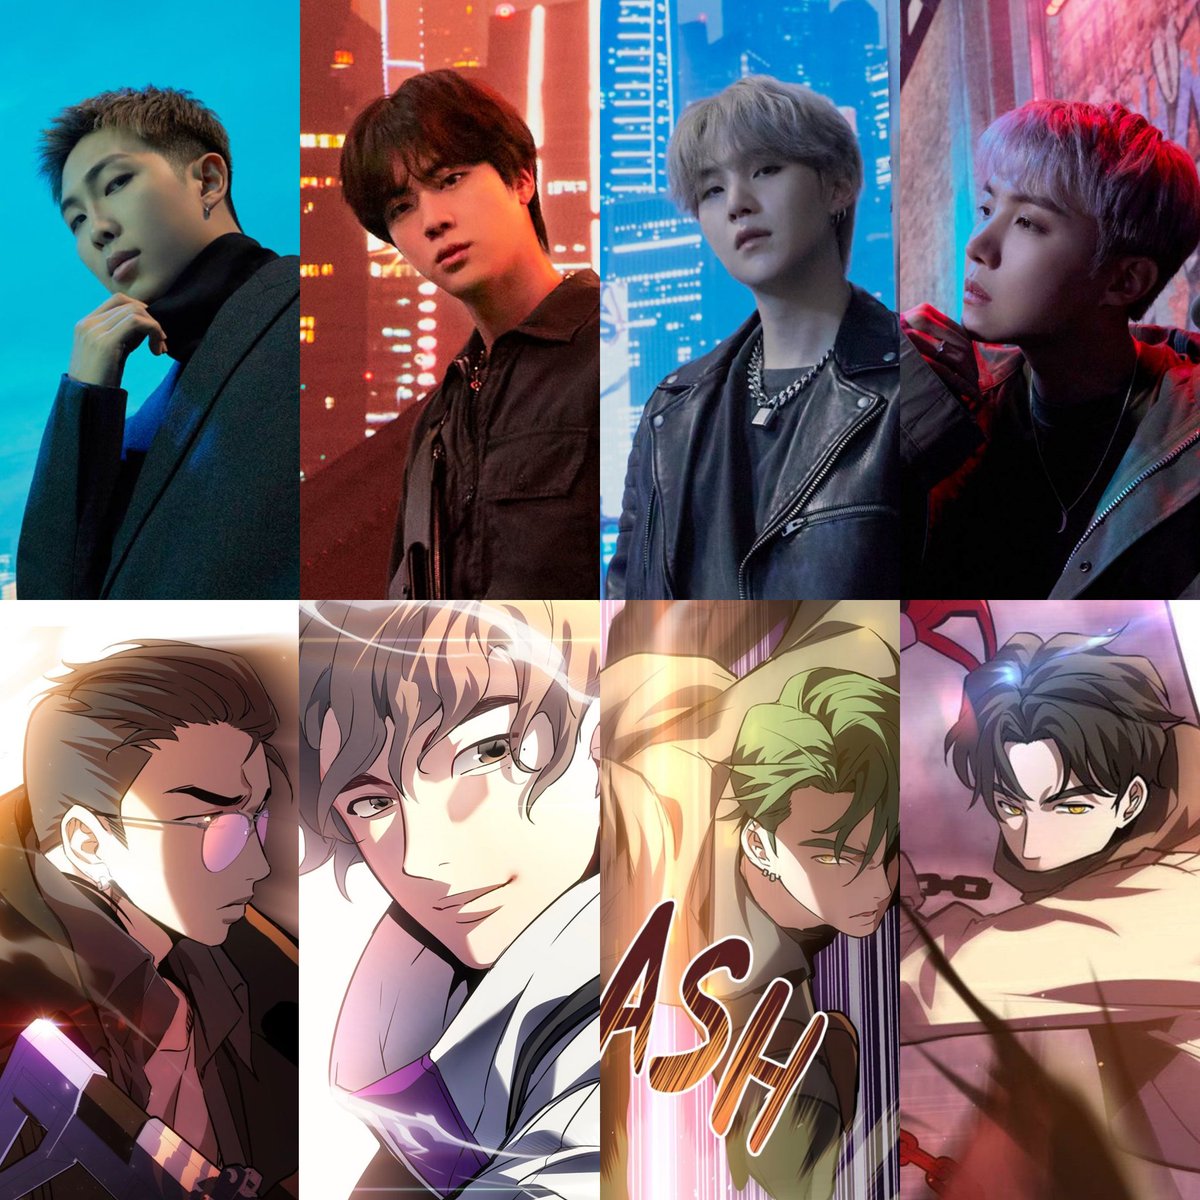 7 Fates: CHAKHO Characters |
Hyung line 

#DOGEON_RM
#HWAN_JIN
#CEIN_SUGA
#Hosu_Jhope
#7FATES_CHAKHO